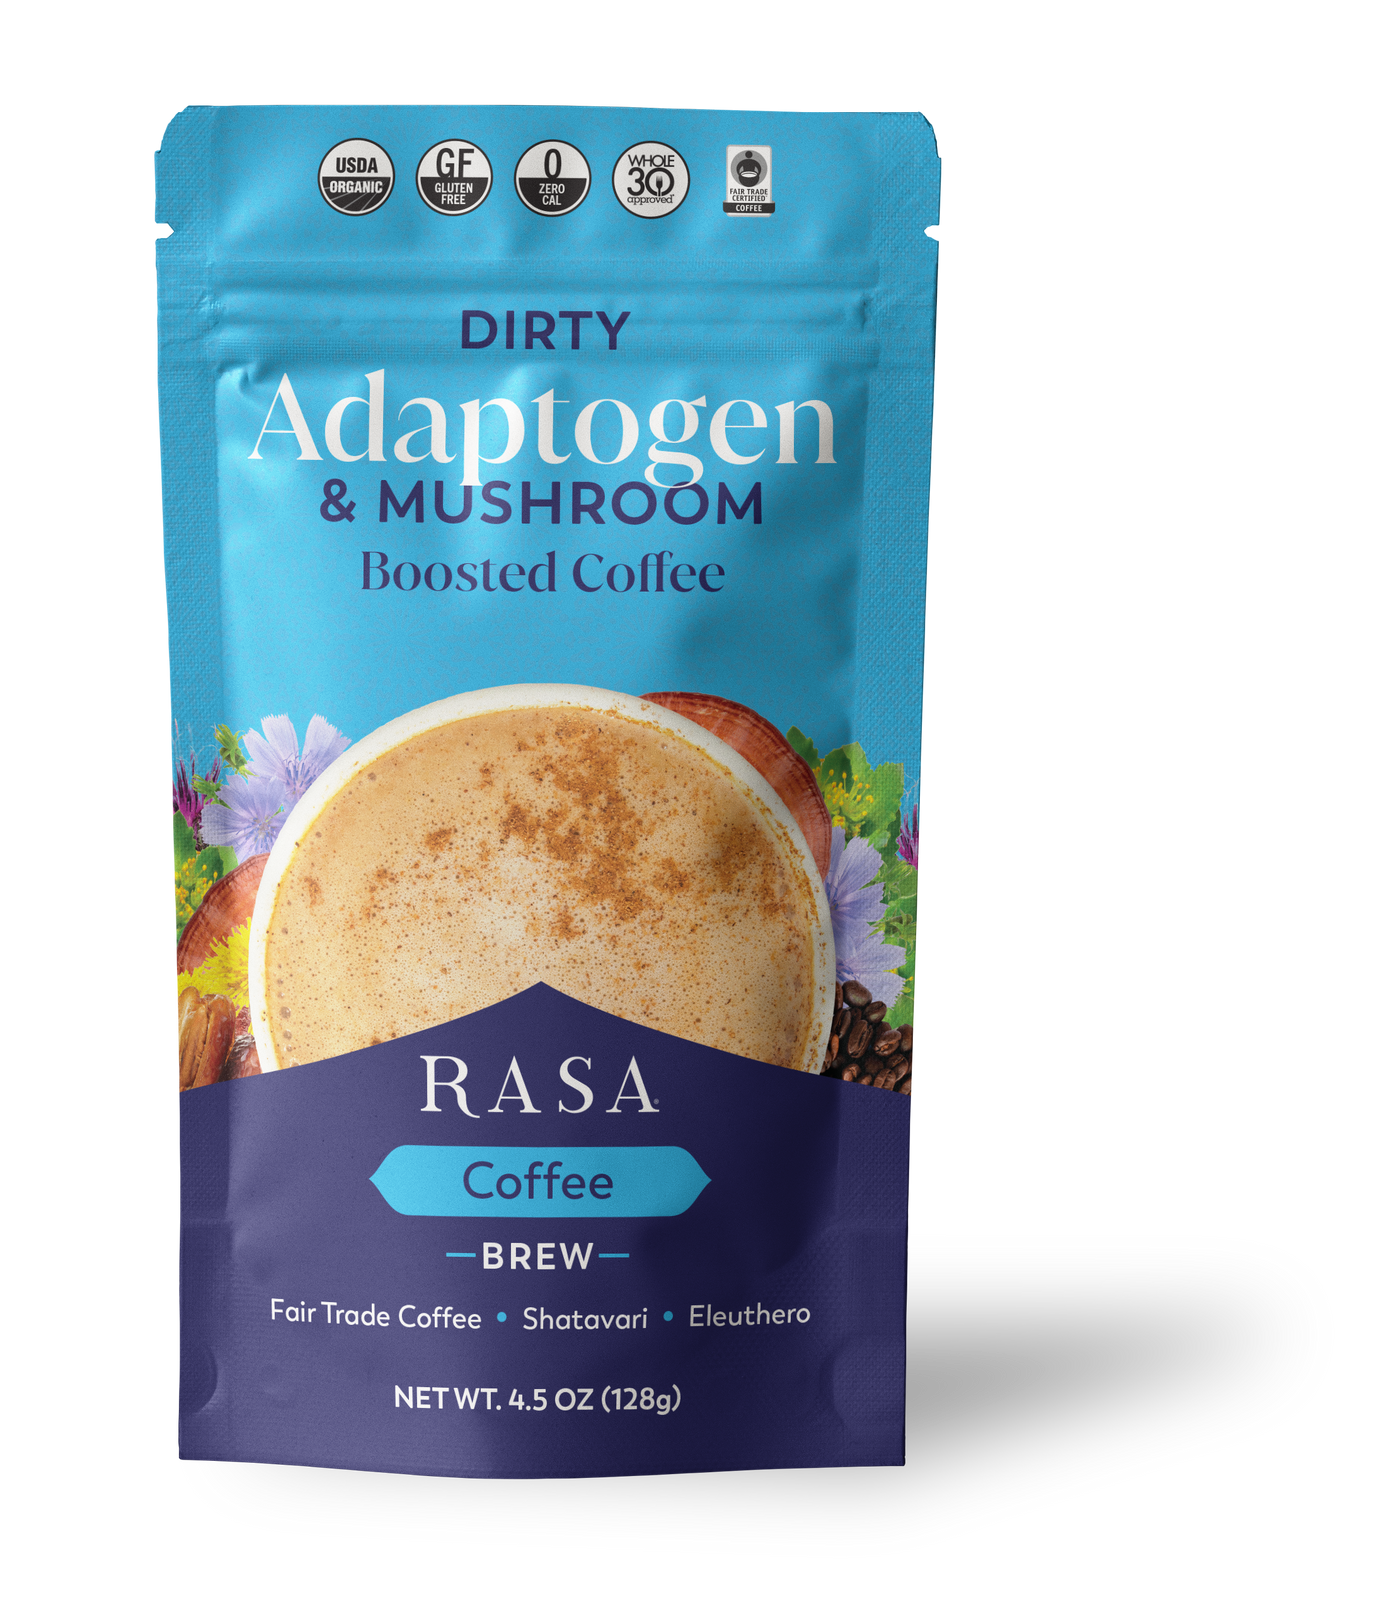 Dirty Adaptogen Mushroom Boosted Coffee